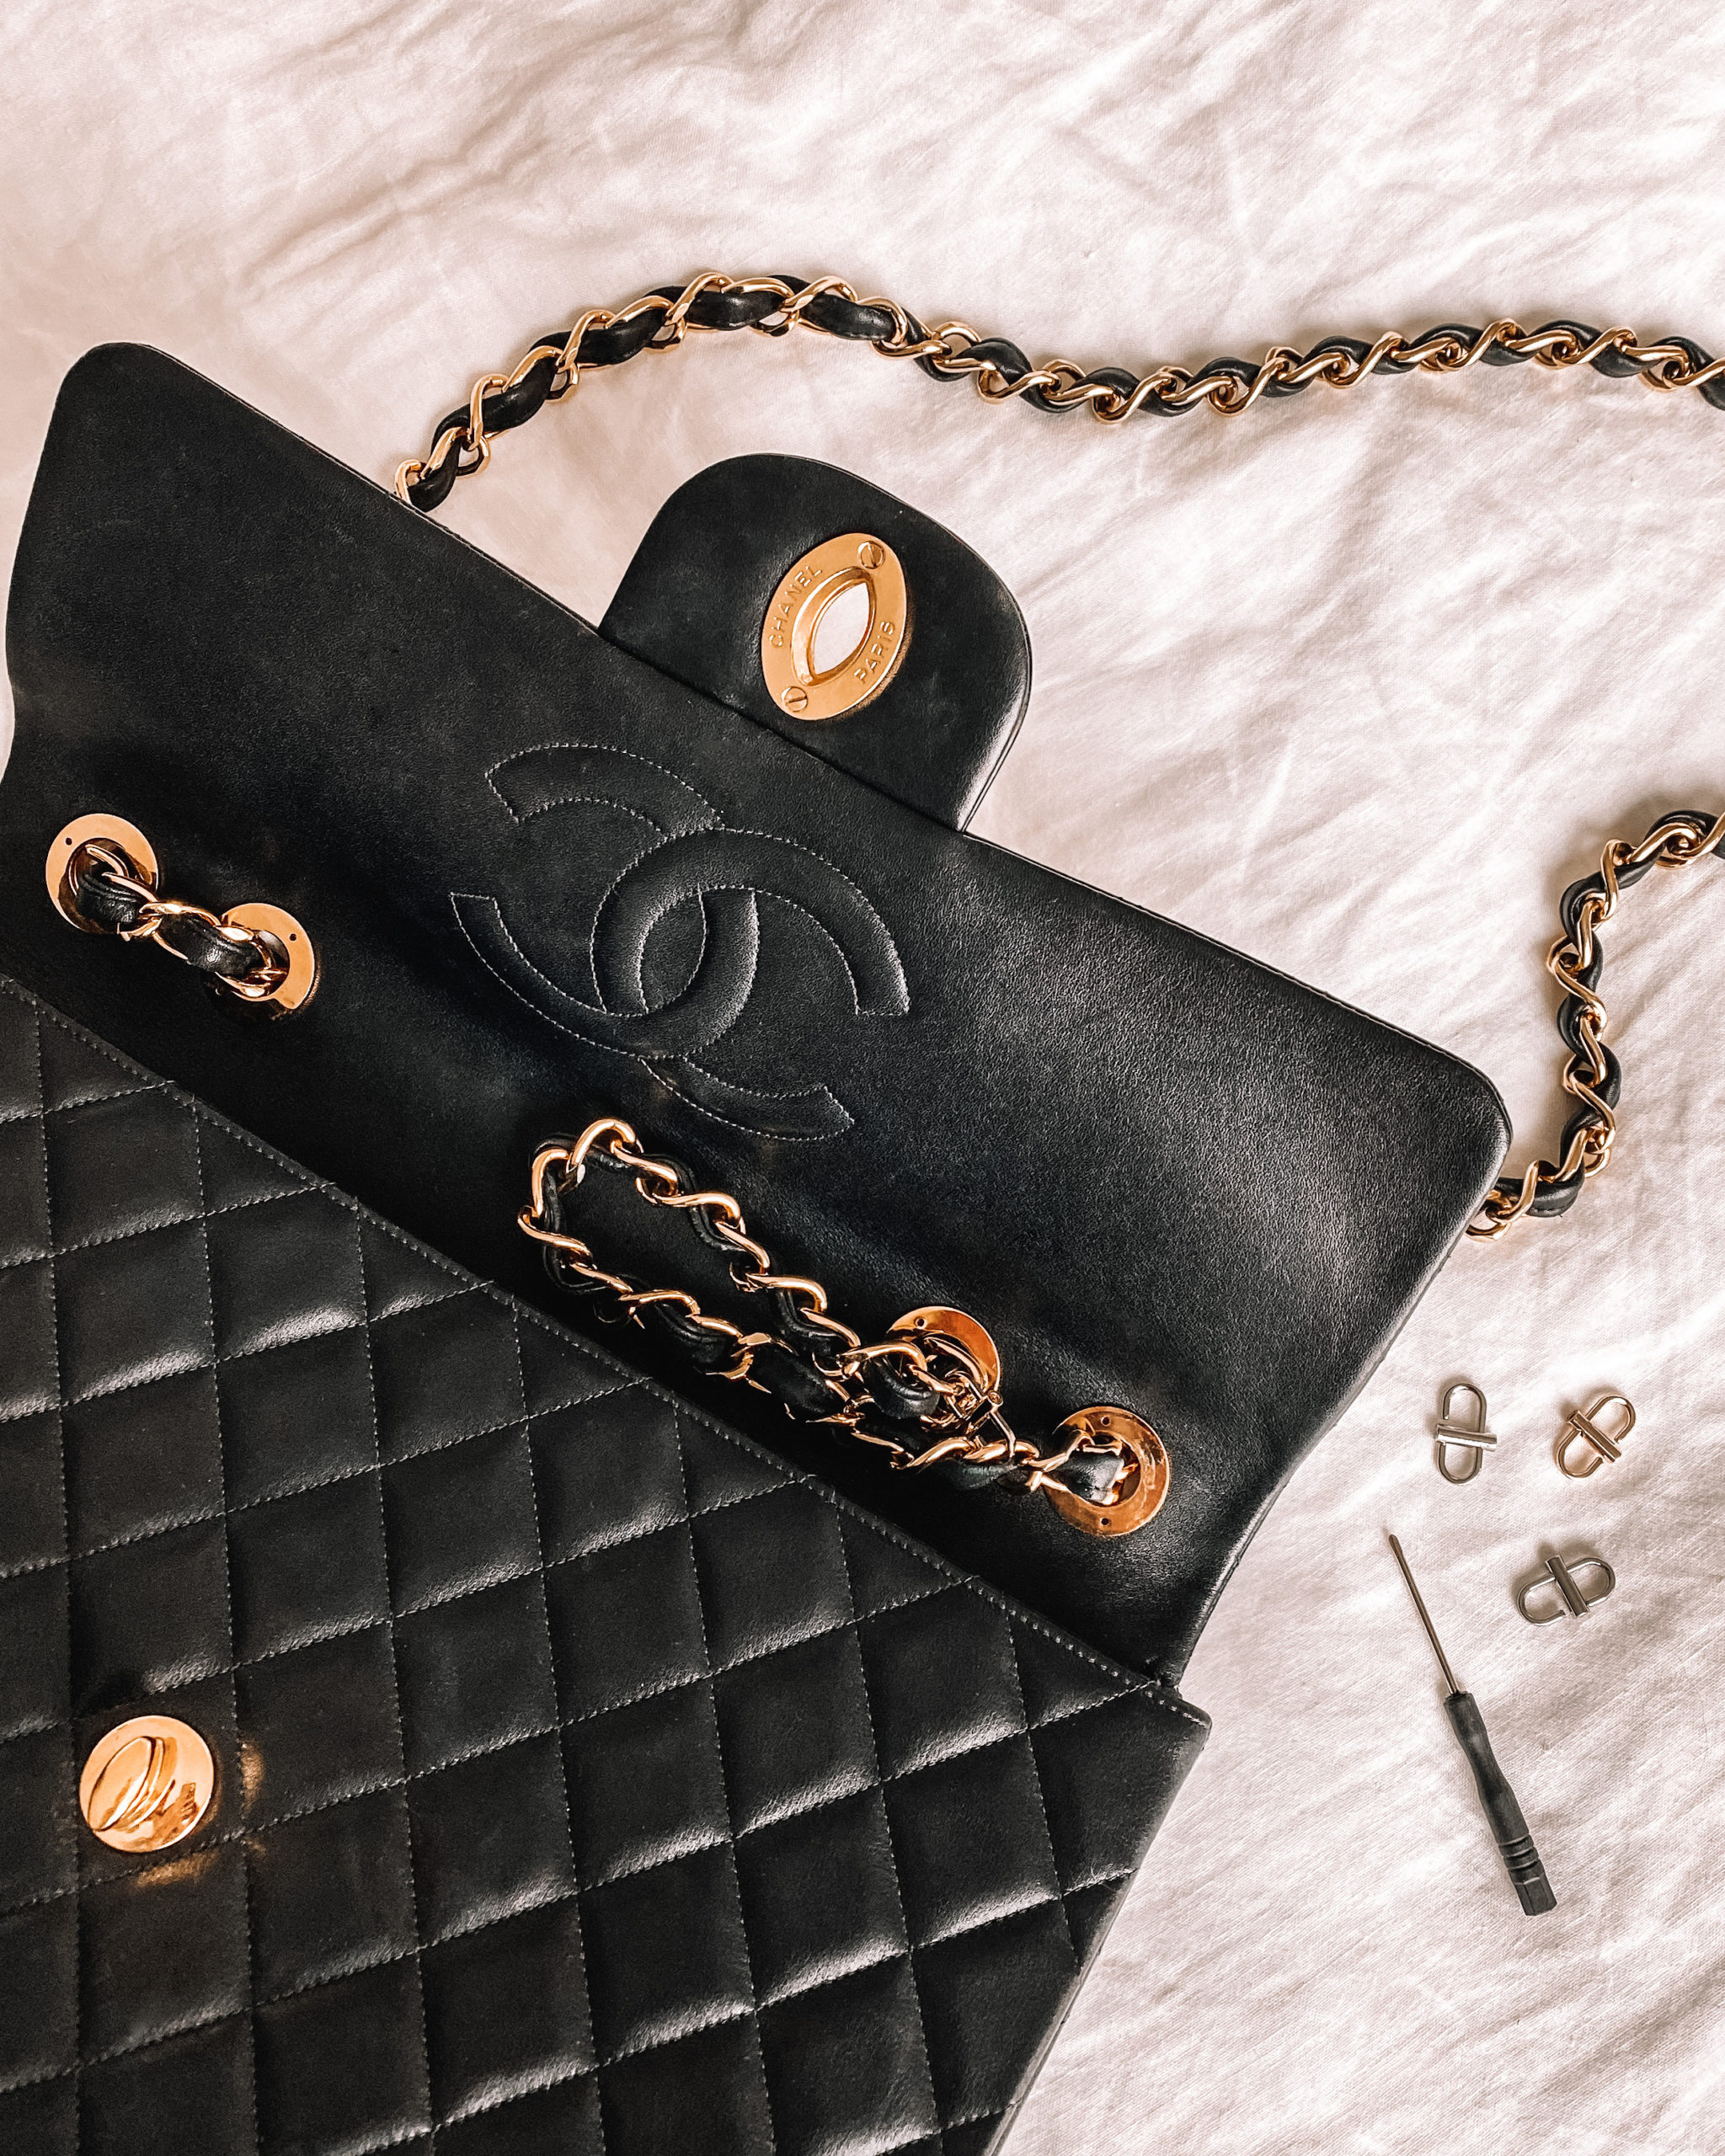 Fashion Jackson Chanel XL Jumbo Handbag with Chain Shortener